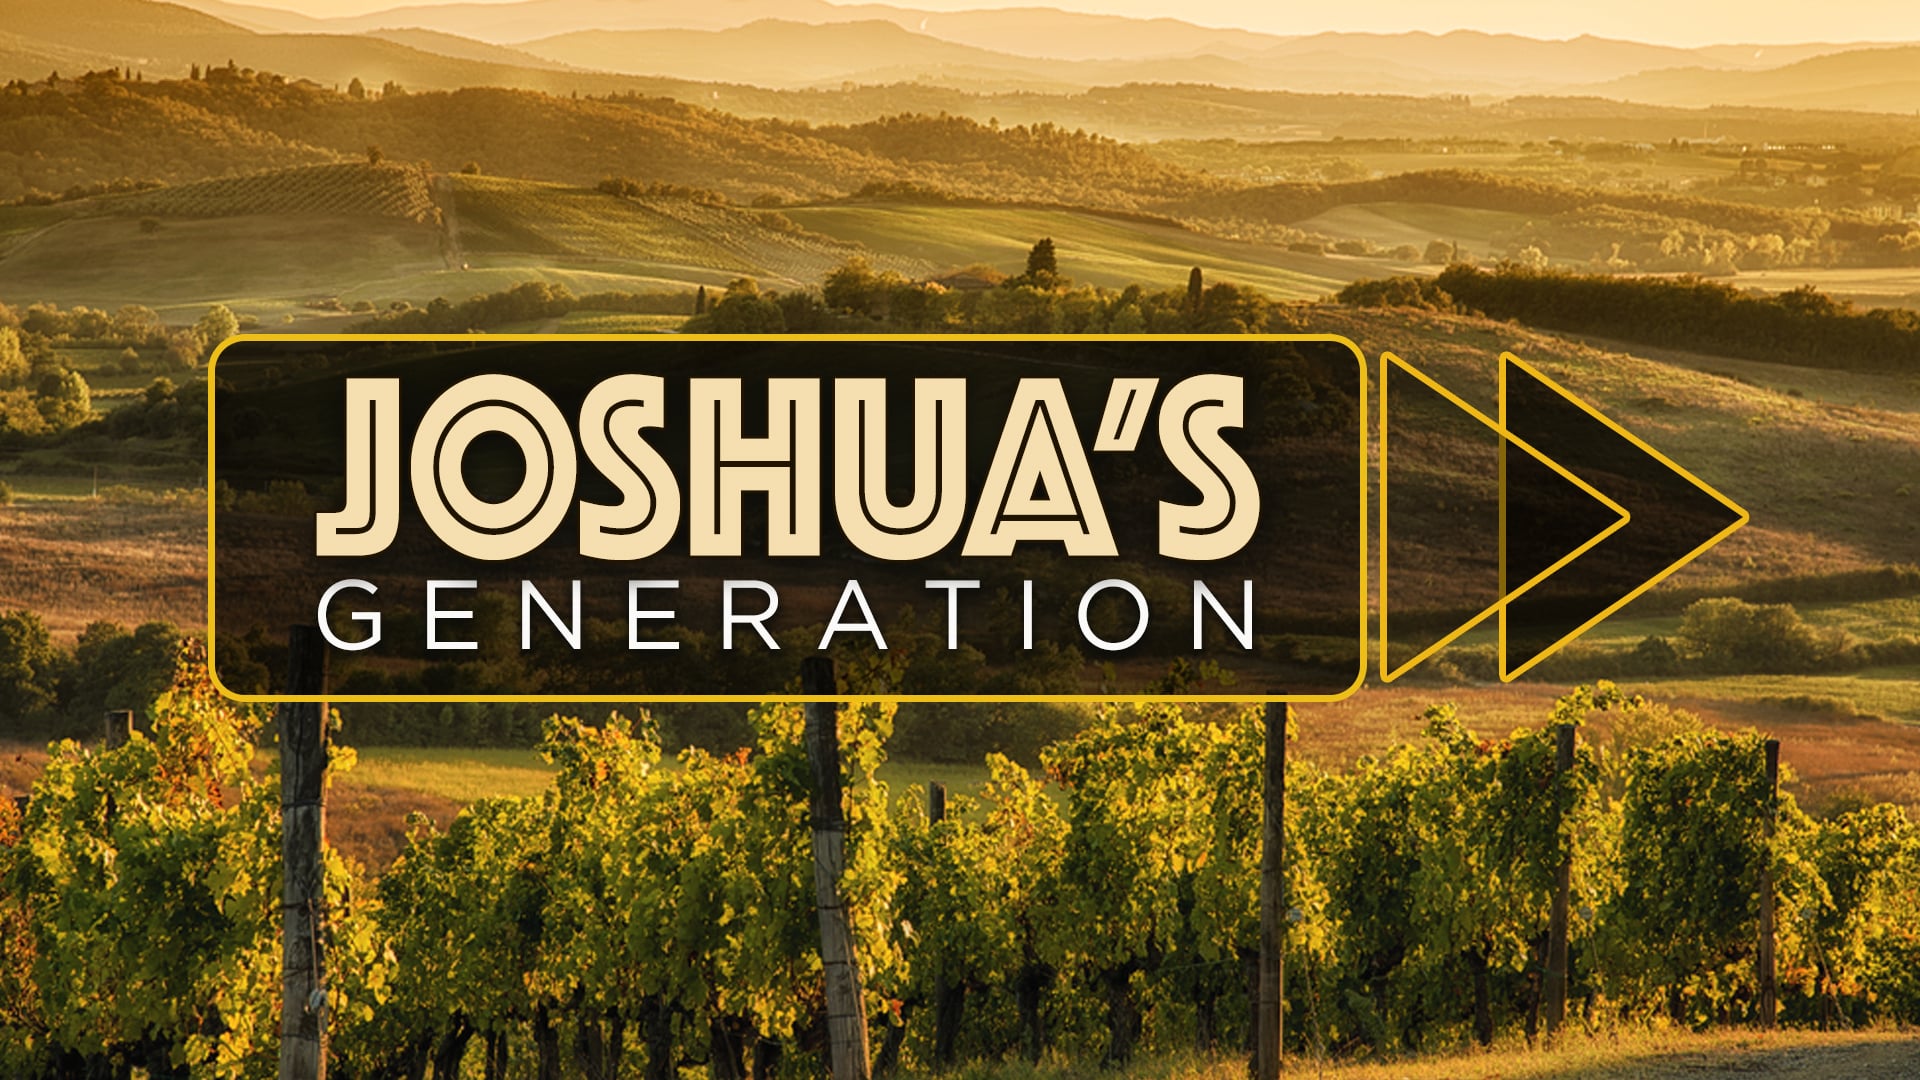 Joshua's generation